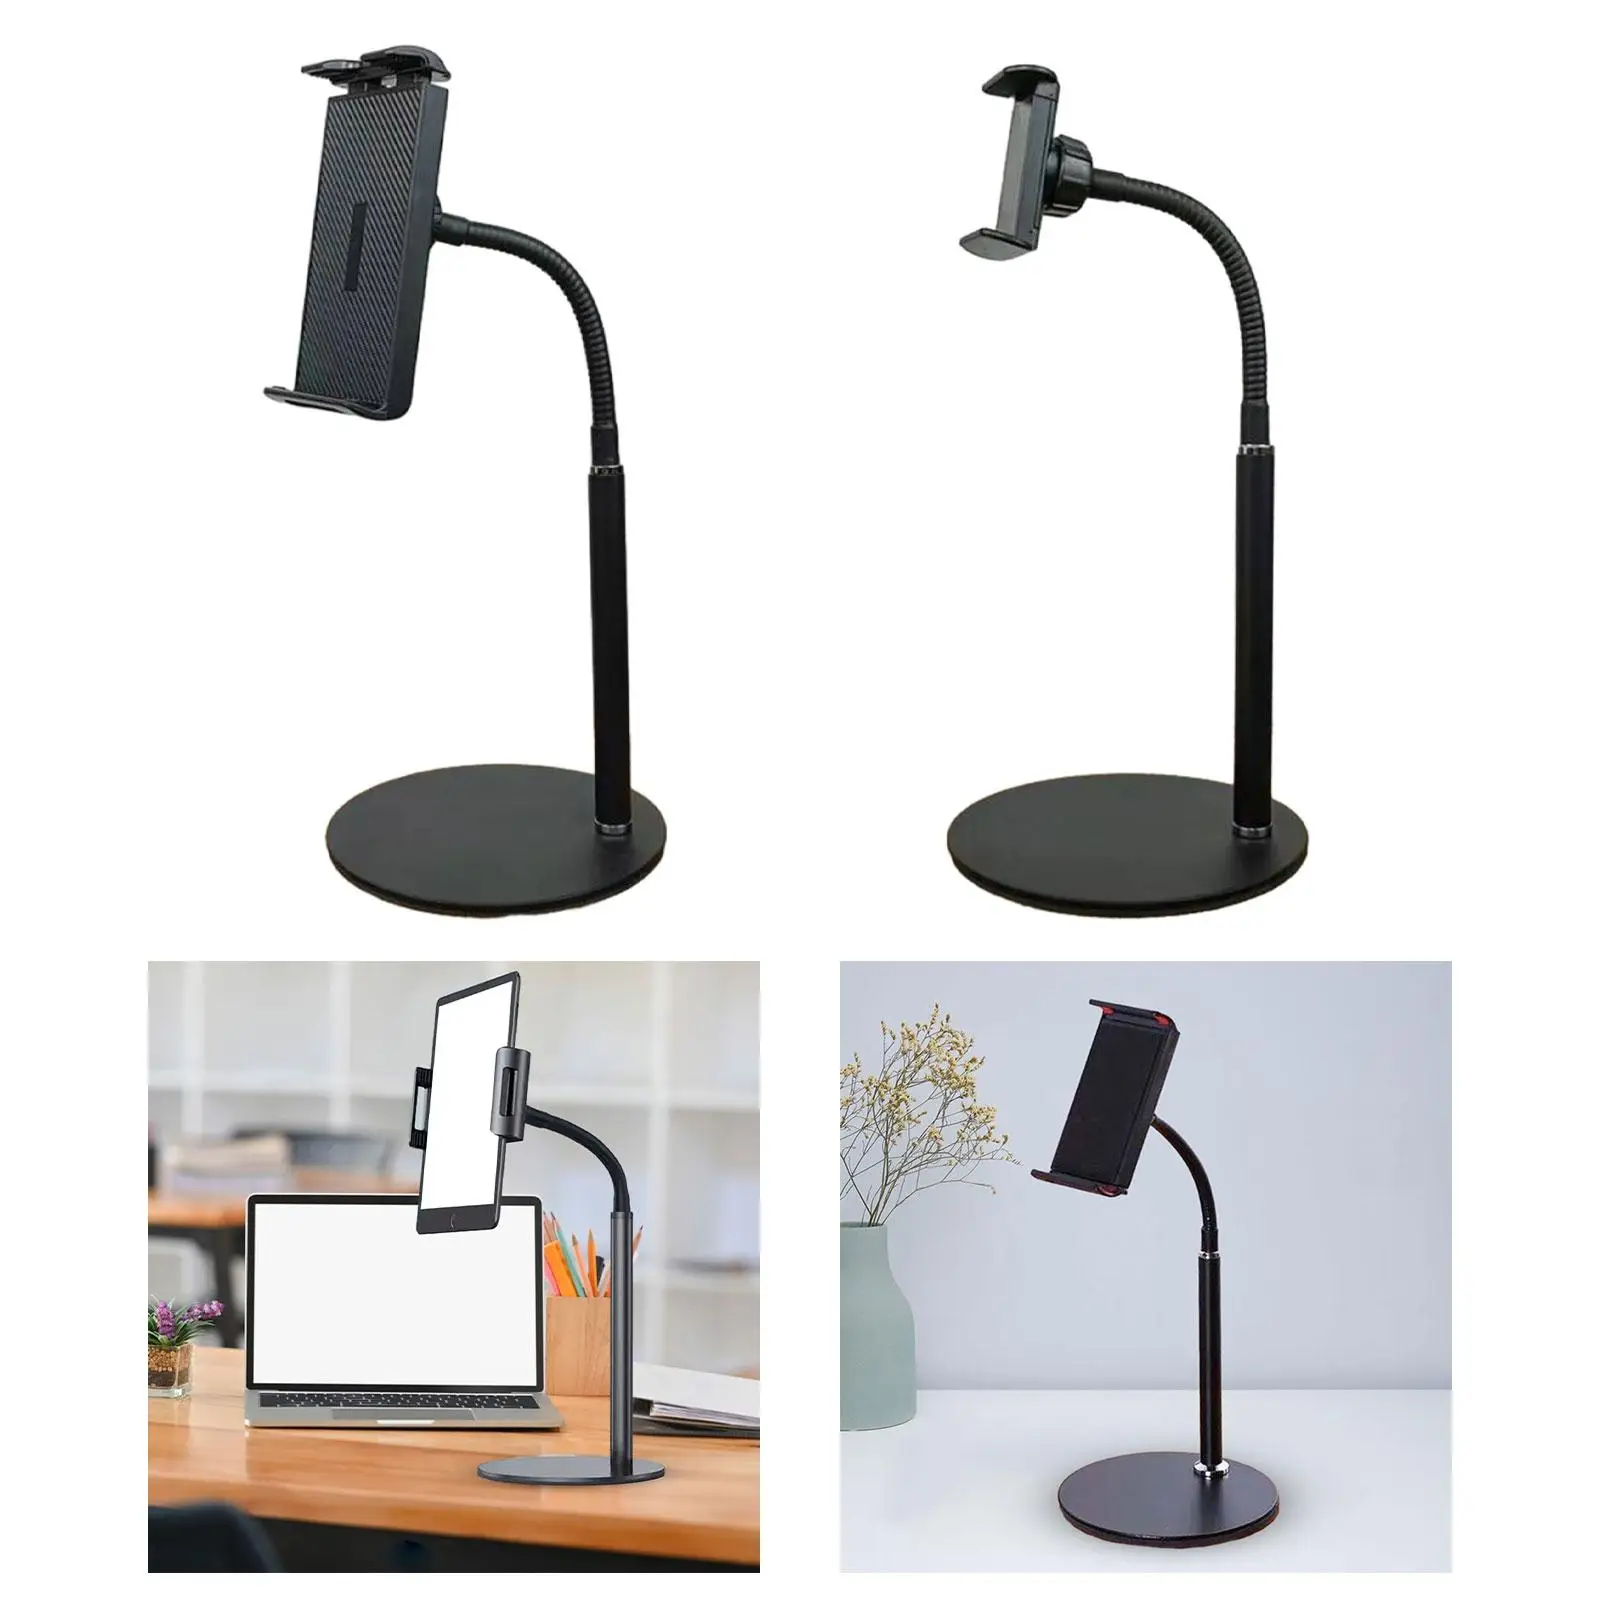 Phone Stand for Desk Desk Accessories Lightweight Holder Desktop Cellphone Stand for Office Bedroom Kitchen Video Recording Home